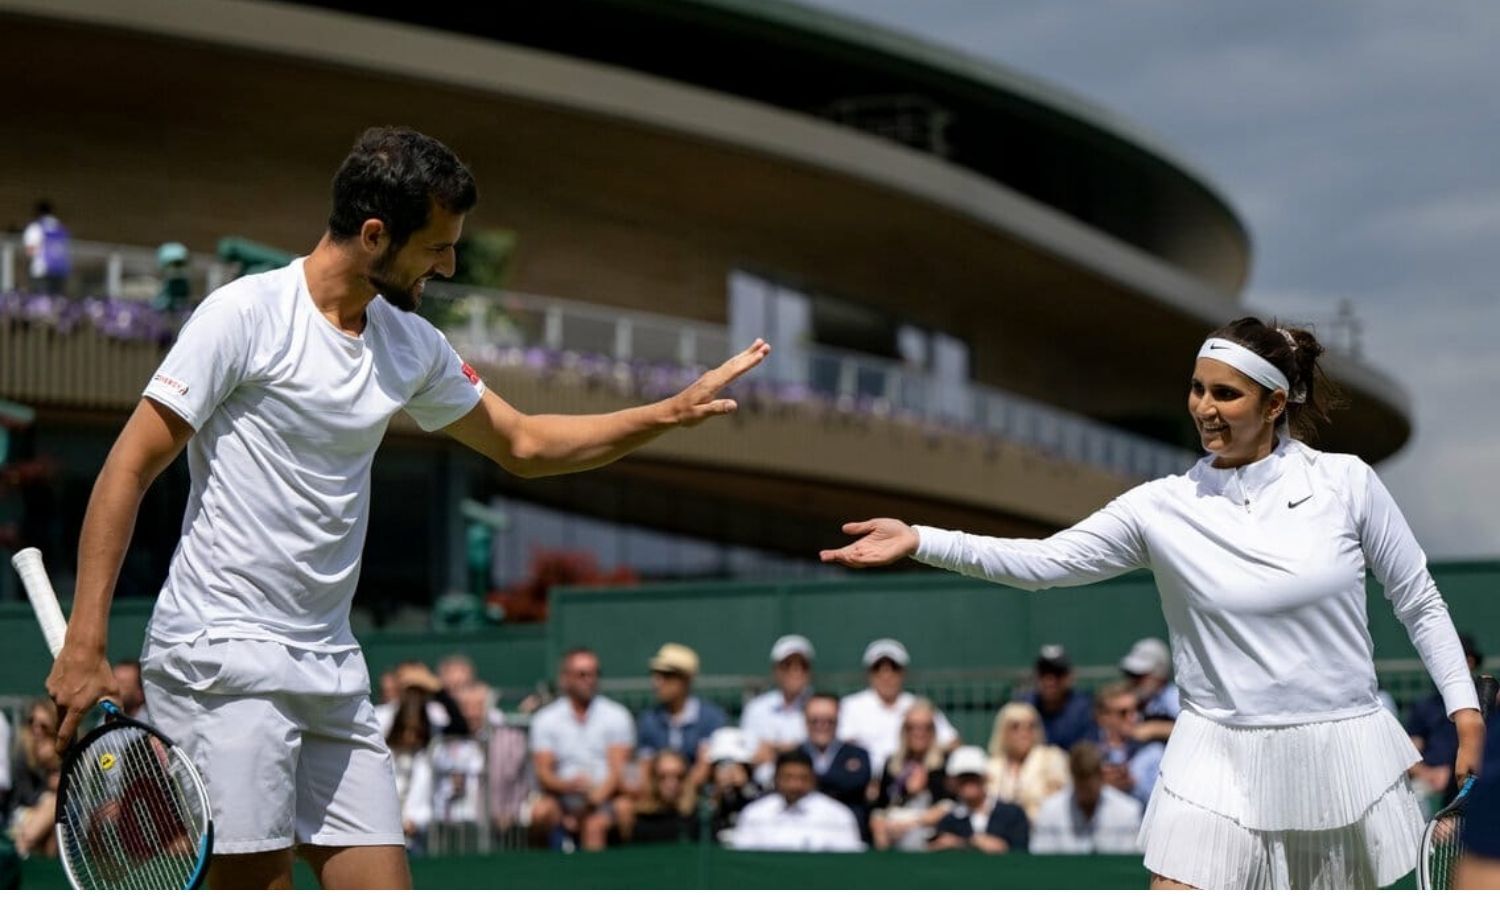 Wimbledon Sania Mirza/Mate Pavic suffer heartbreaking loss in semifinals